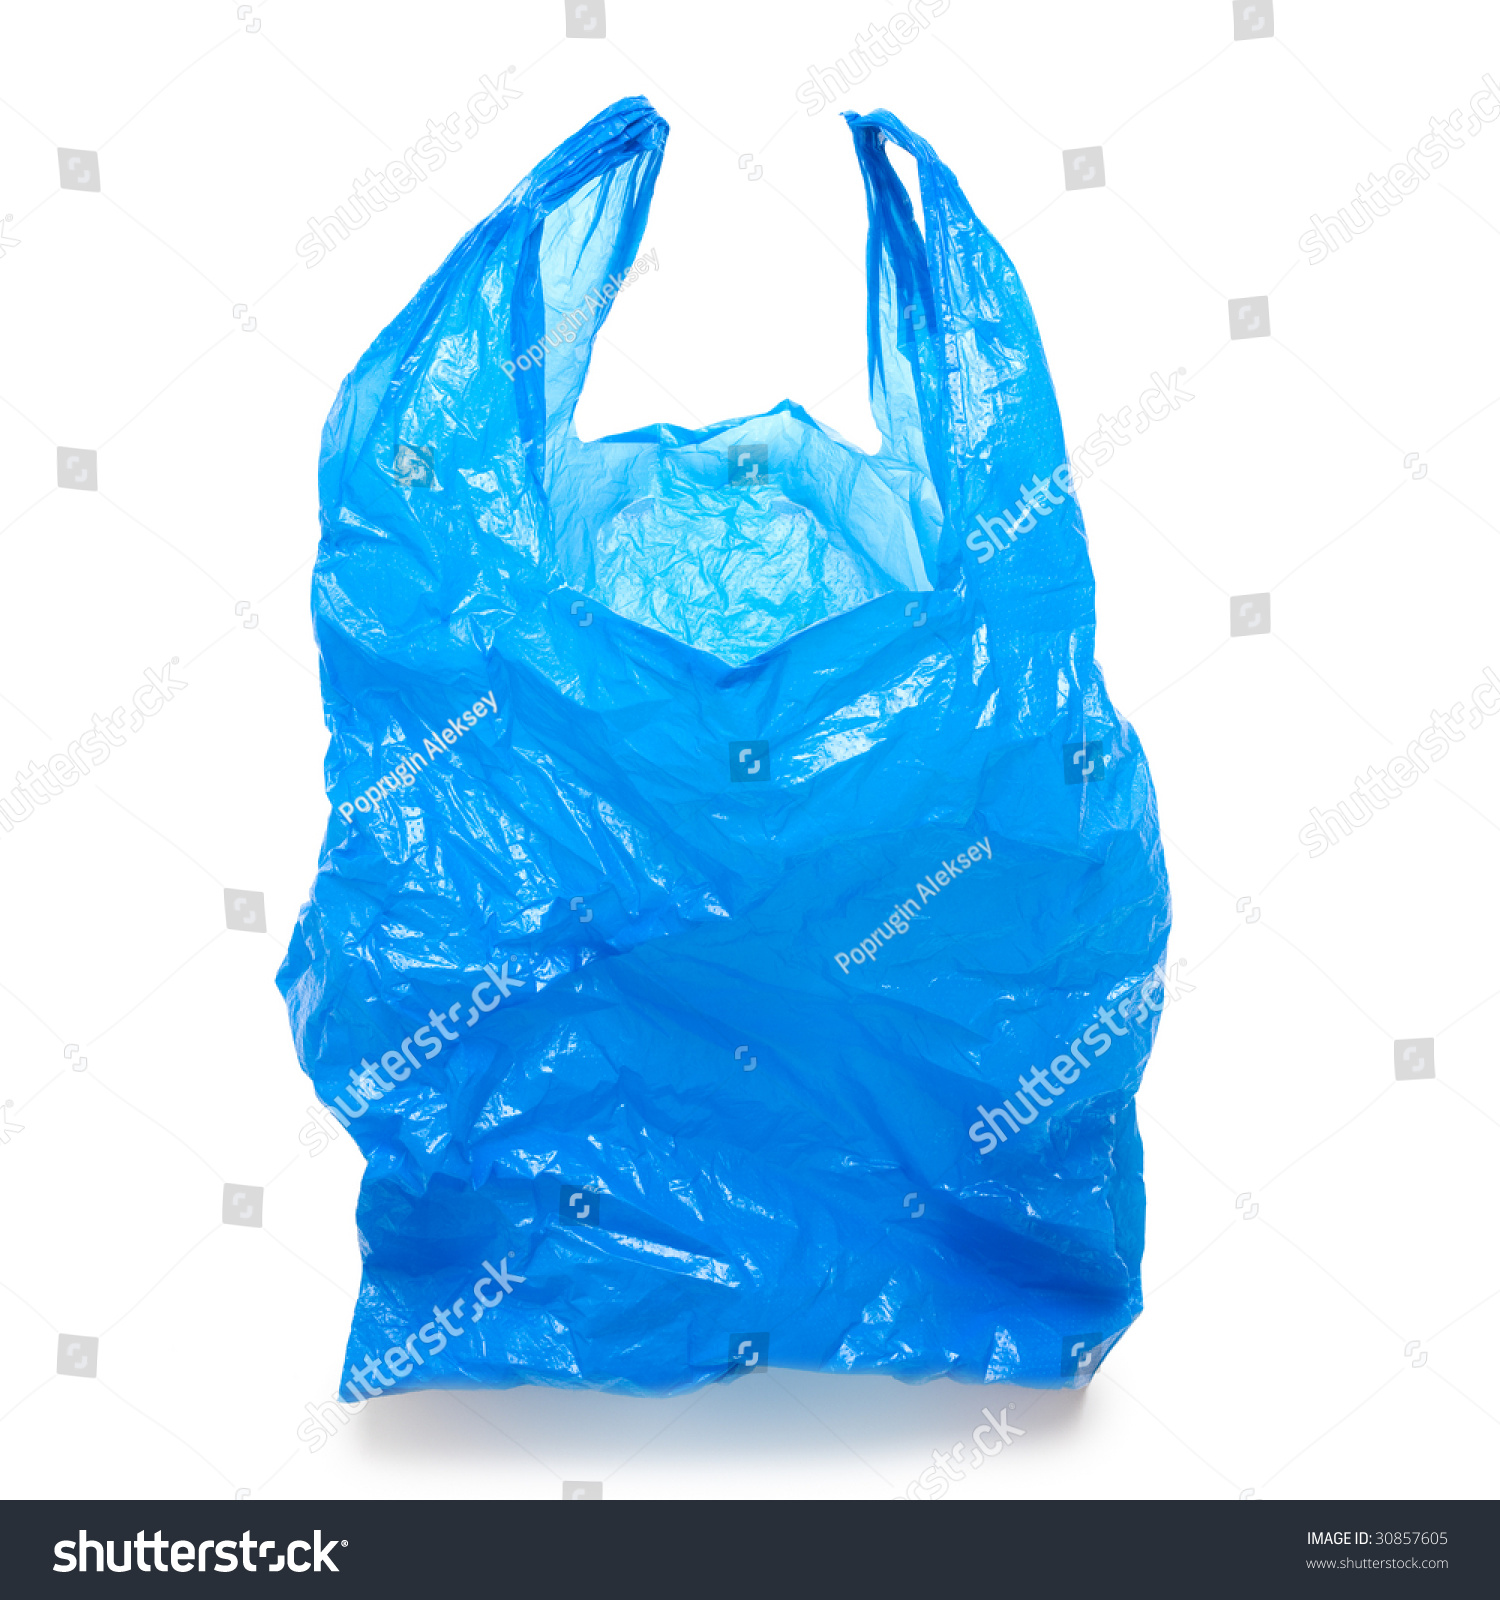 plastic bag clip art free - photo #36